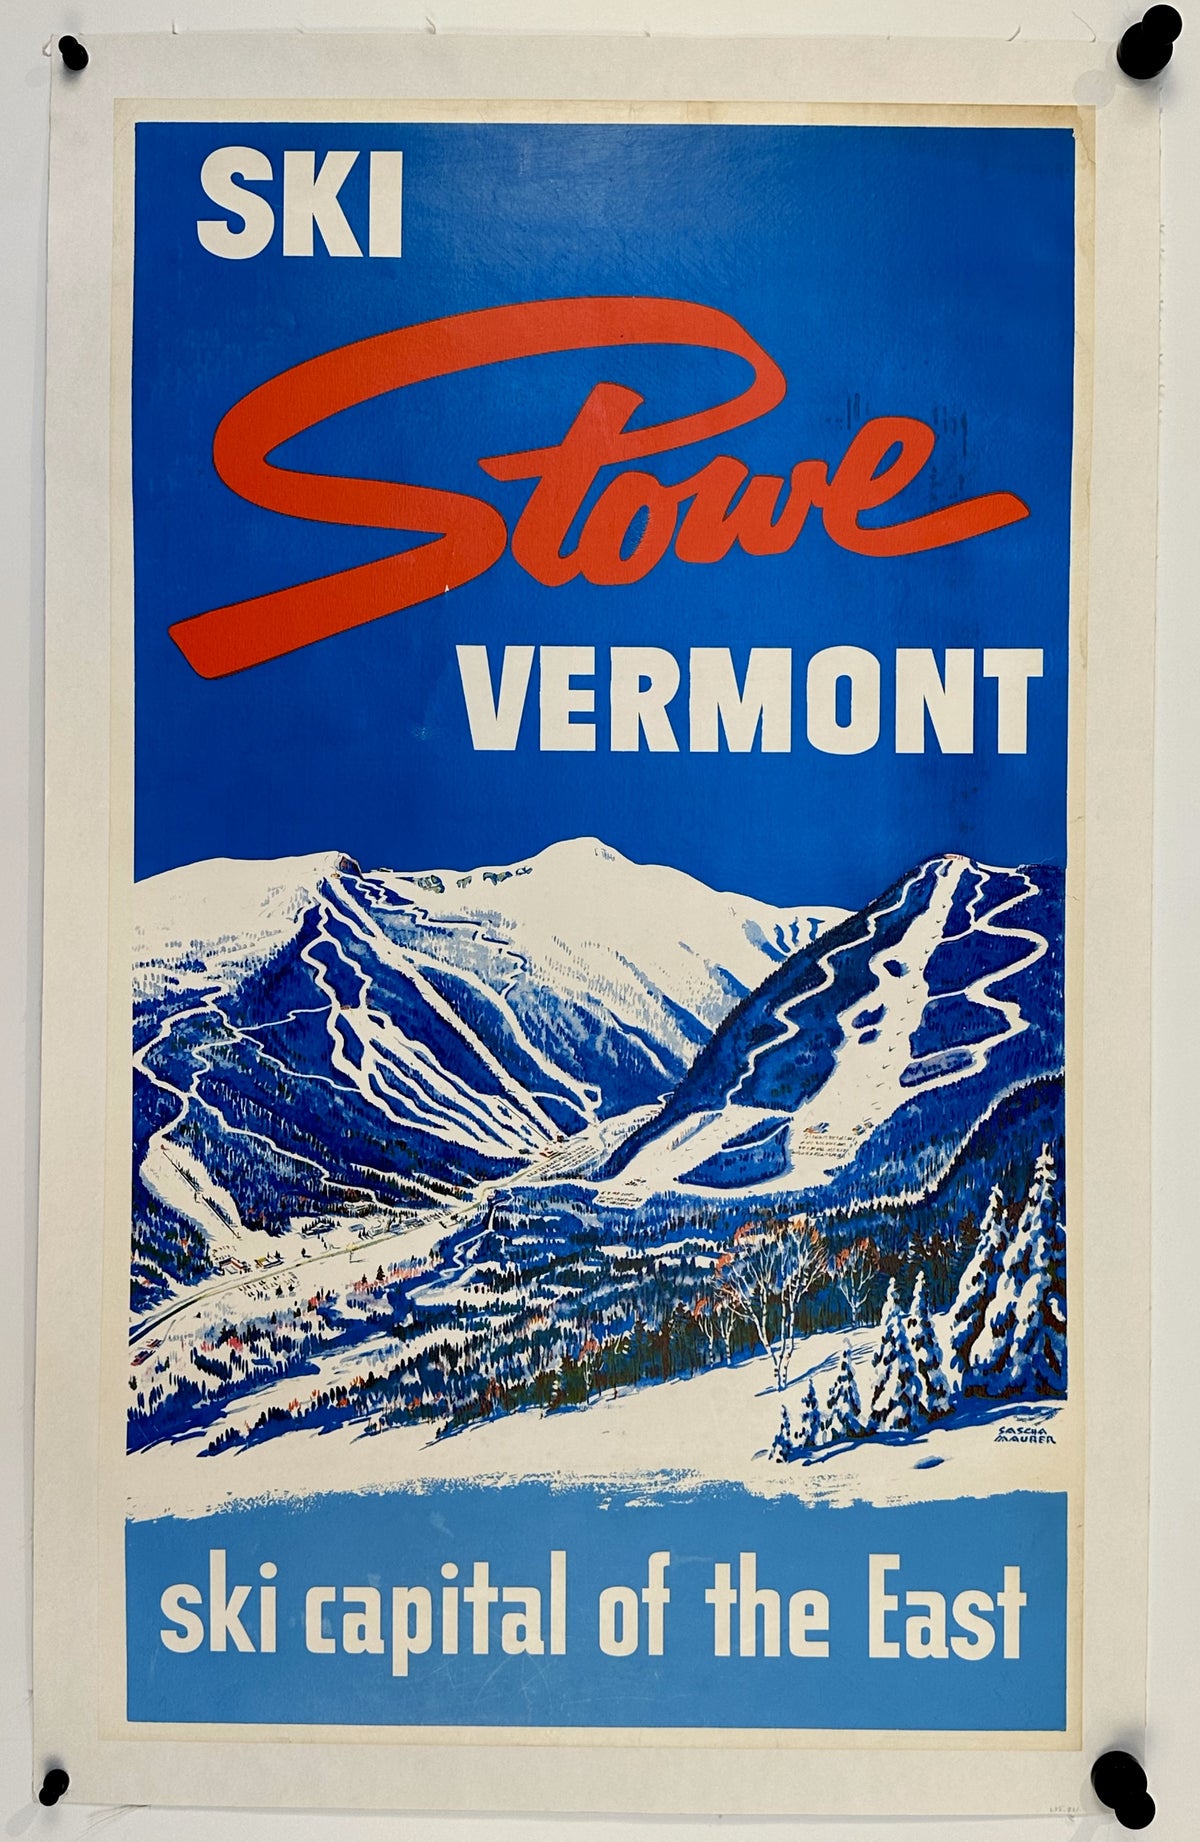 Ski- Stowe, Vermont - Authentic Vintage Poster